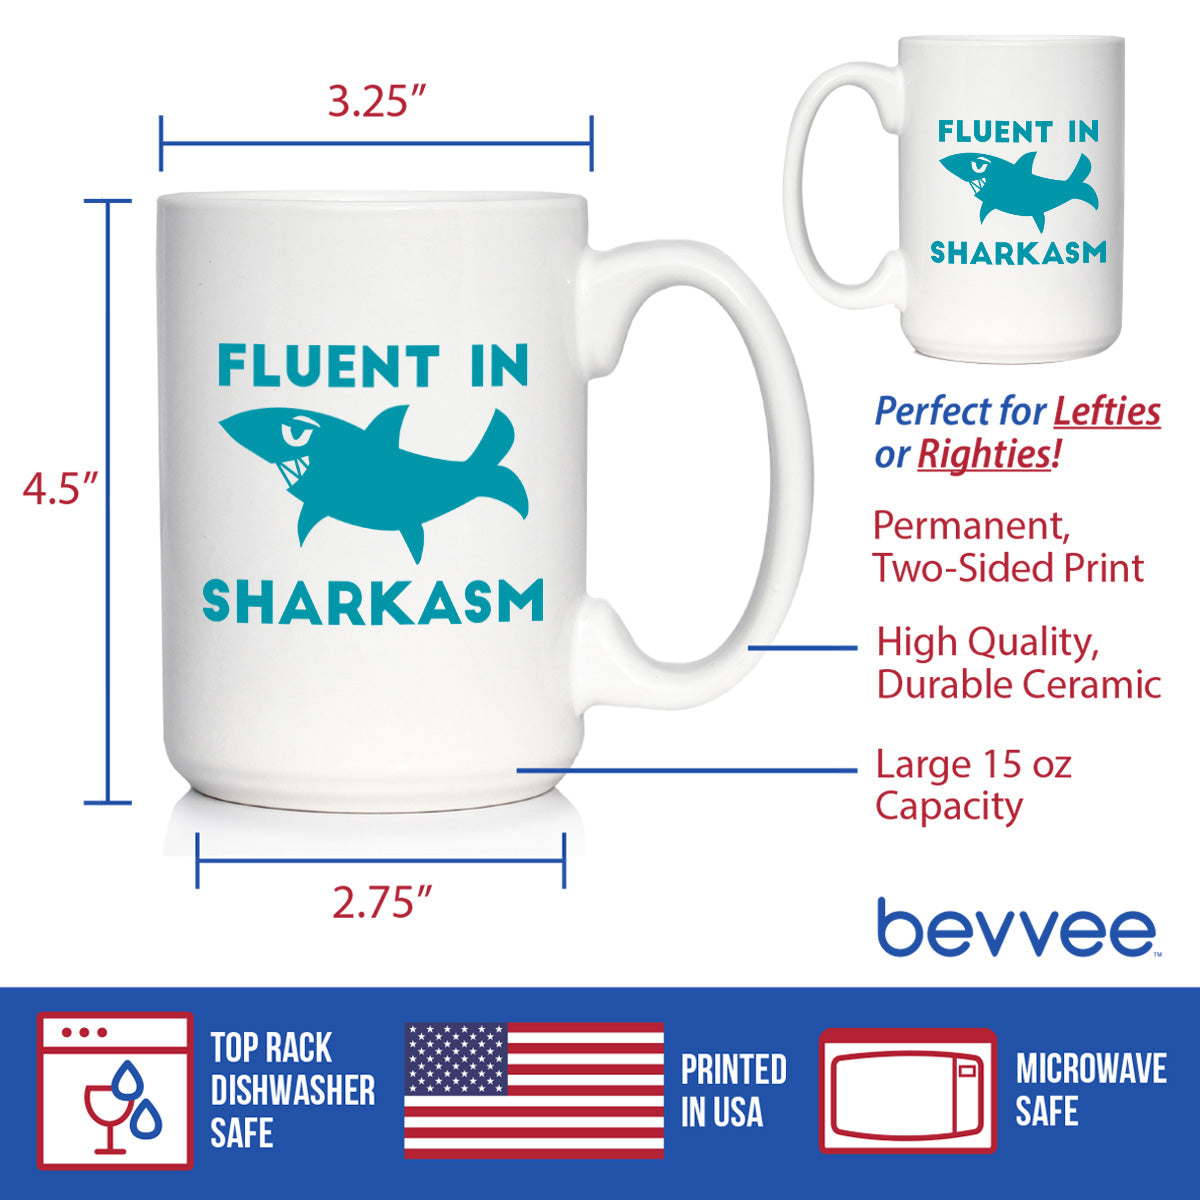 Fluent in Sharkasm - Shark Coffee Mug - Cute Funny Gifts for Sarcastic Moms or Dad Joke Lovers